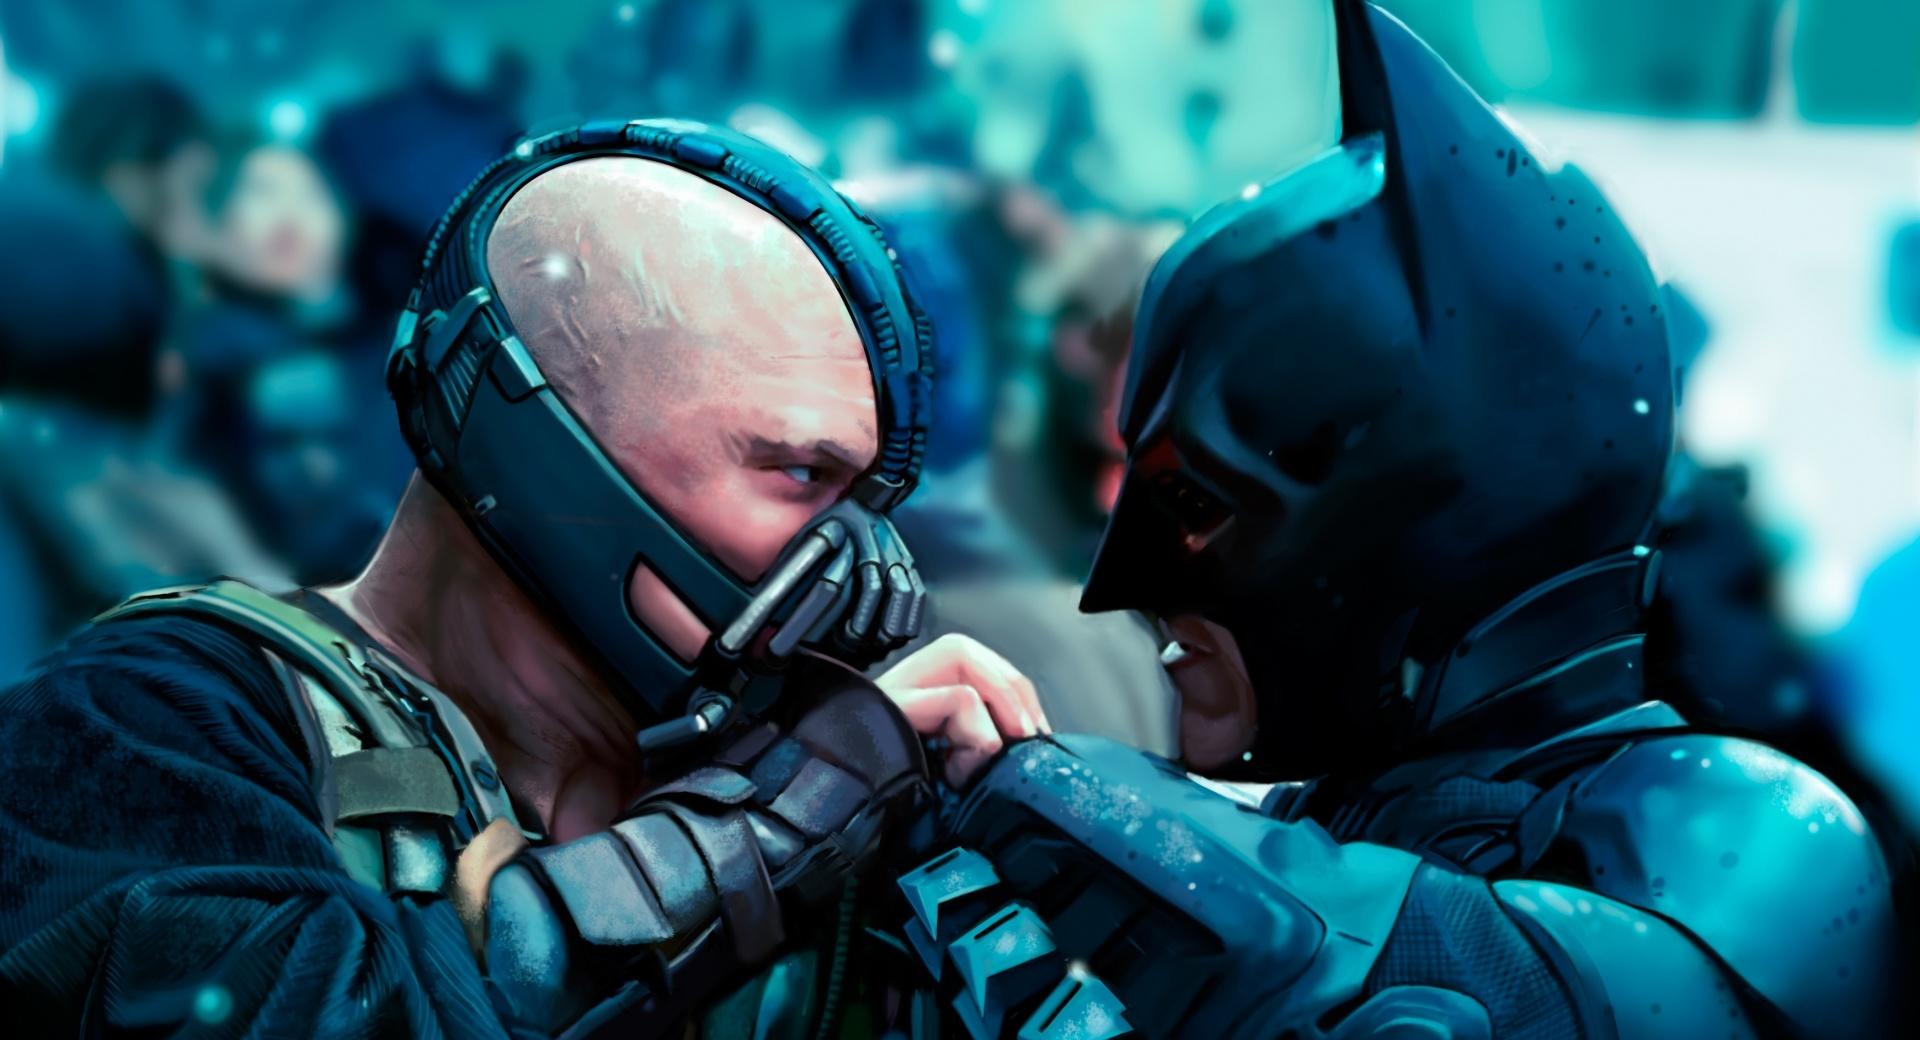 Batman vs Bane wallpapers HD quality